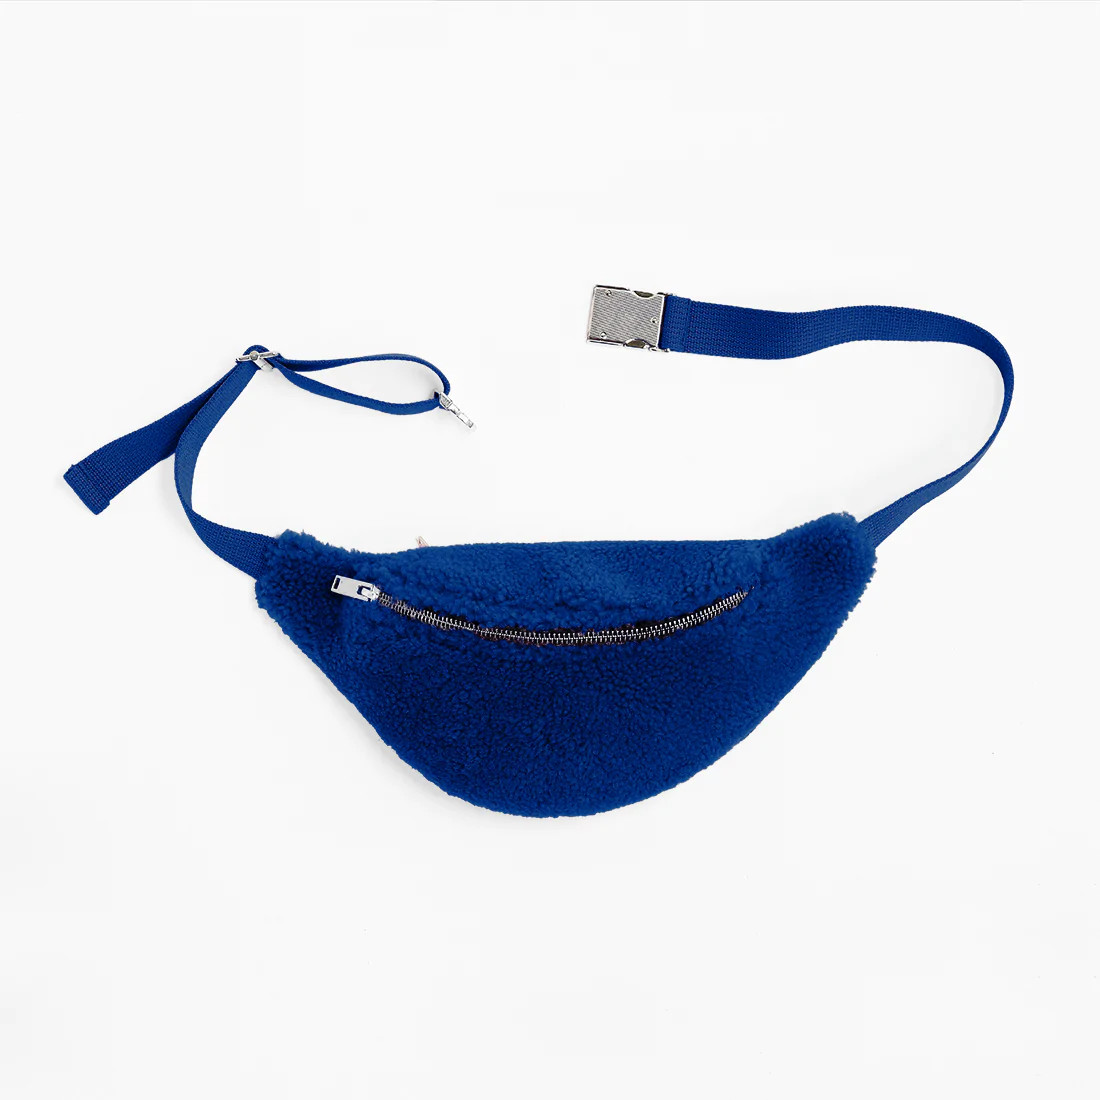 Toasties Paris: Sheepskin Bright Blue Bum Bag, tomfoolery london